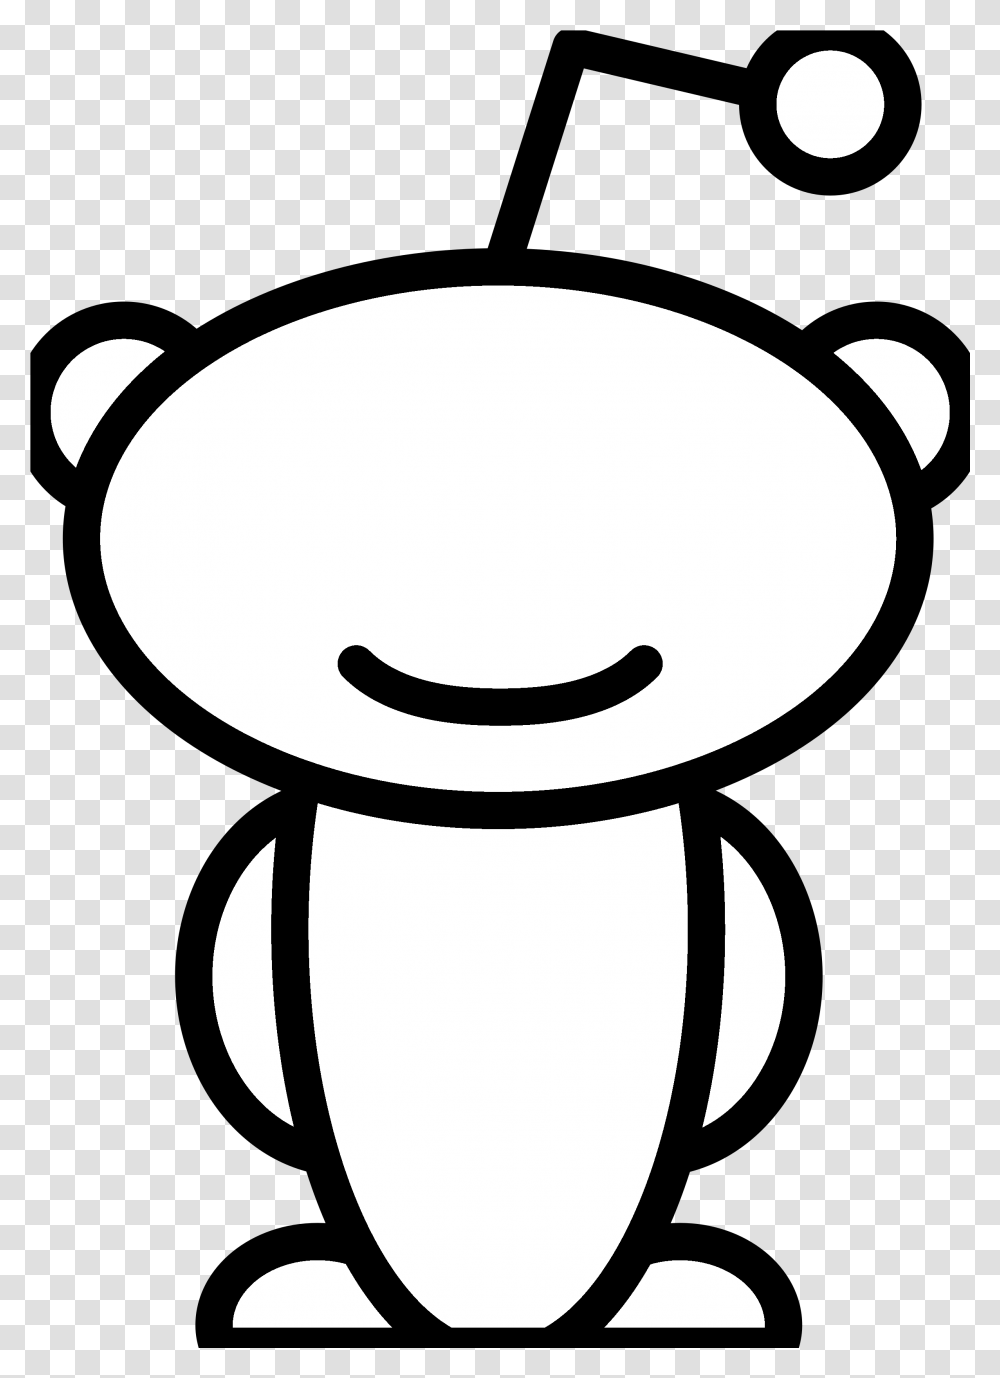 Reddit Alien Logo Svg Black And White Alien Logo, Lamp, Rattle, Stencil, Silhouette Transparent Png